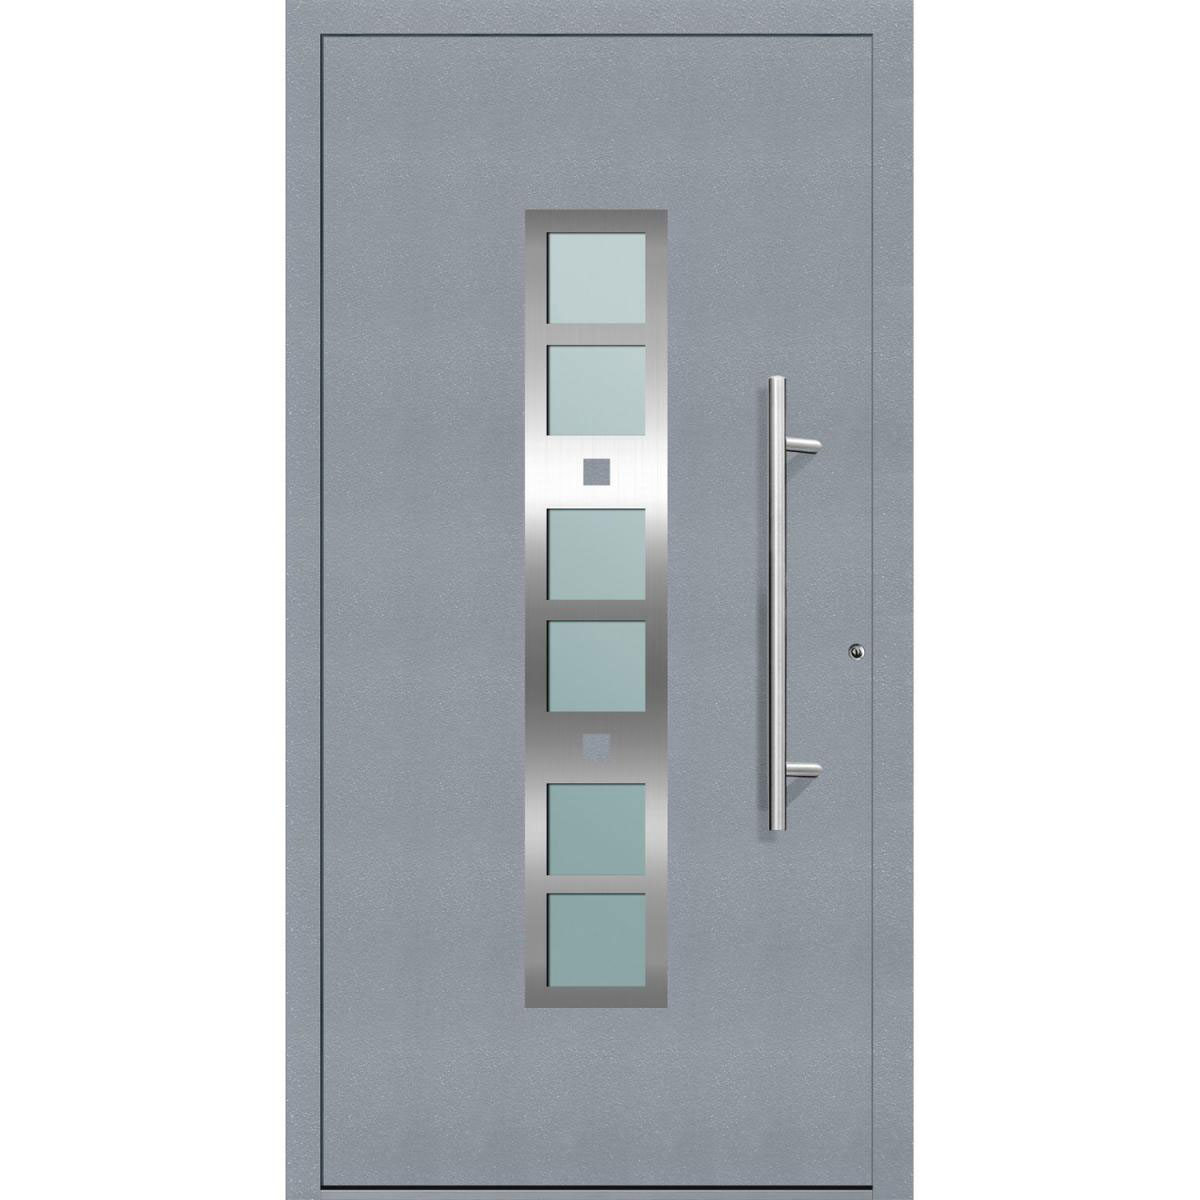 Aluminium Sicherheits-Haustür „Pisa Exklusiv“, 75mm, grau, 110x210 cm, Anschlag rechts, inkl. Griffset